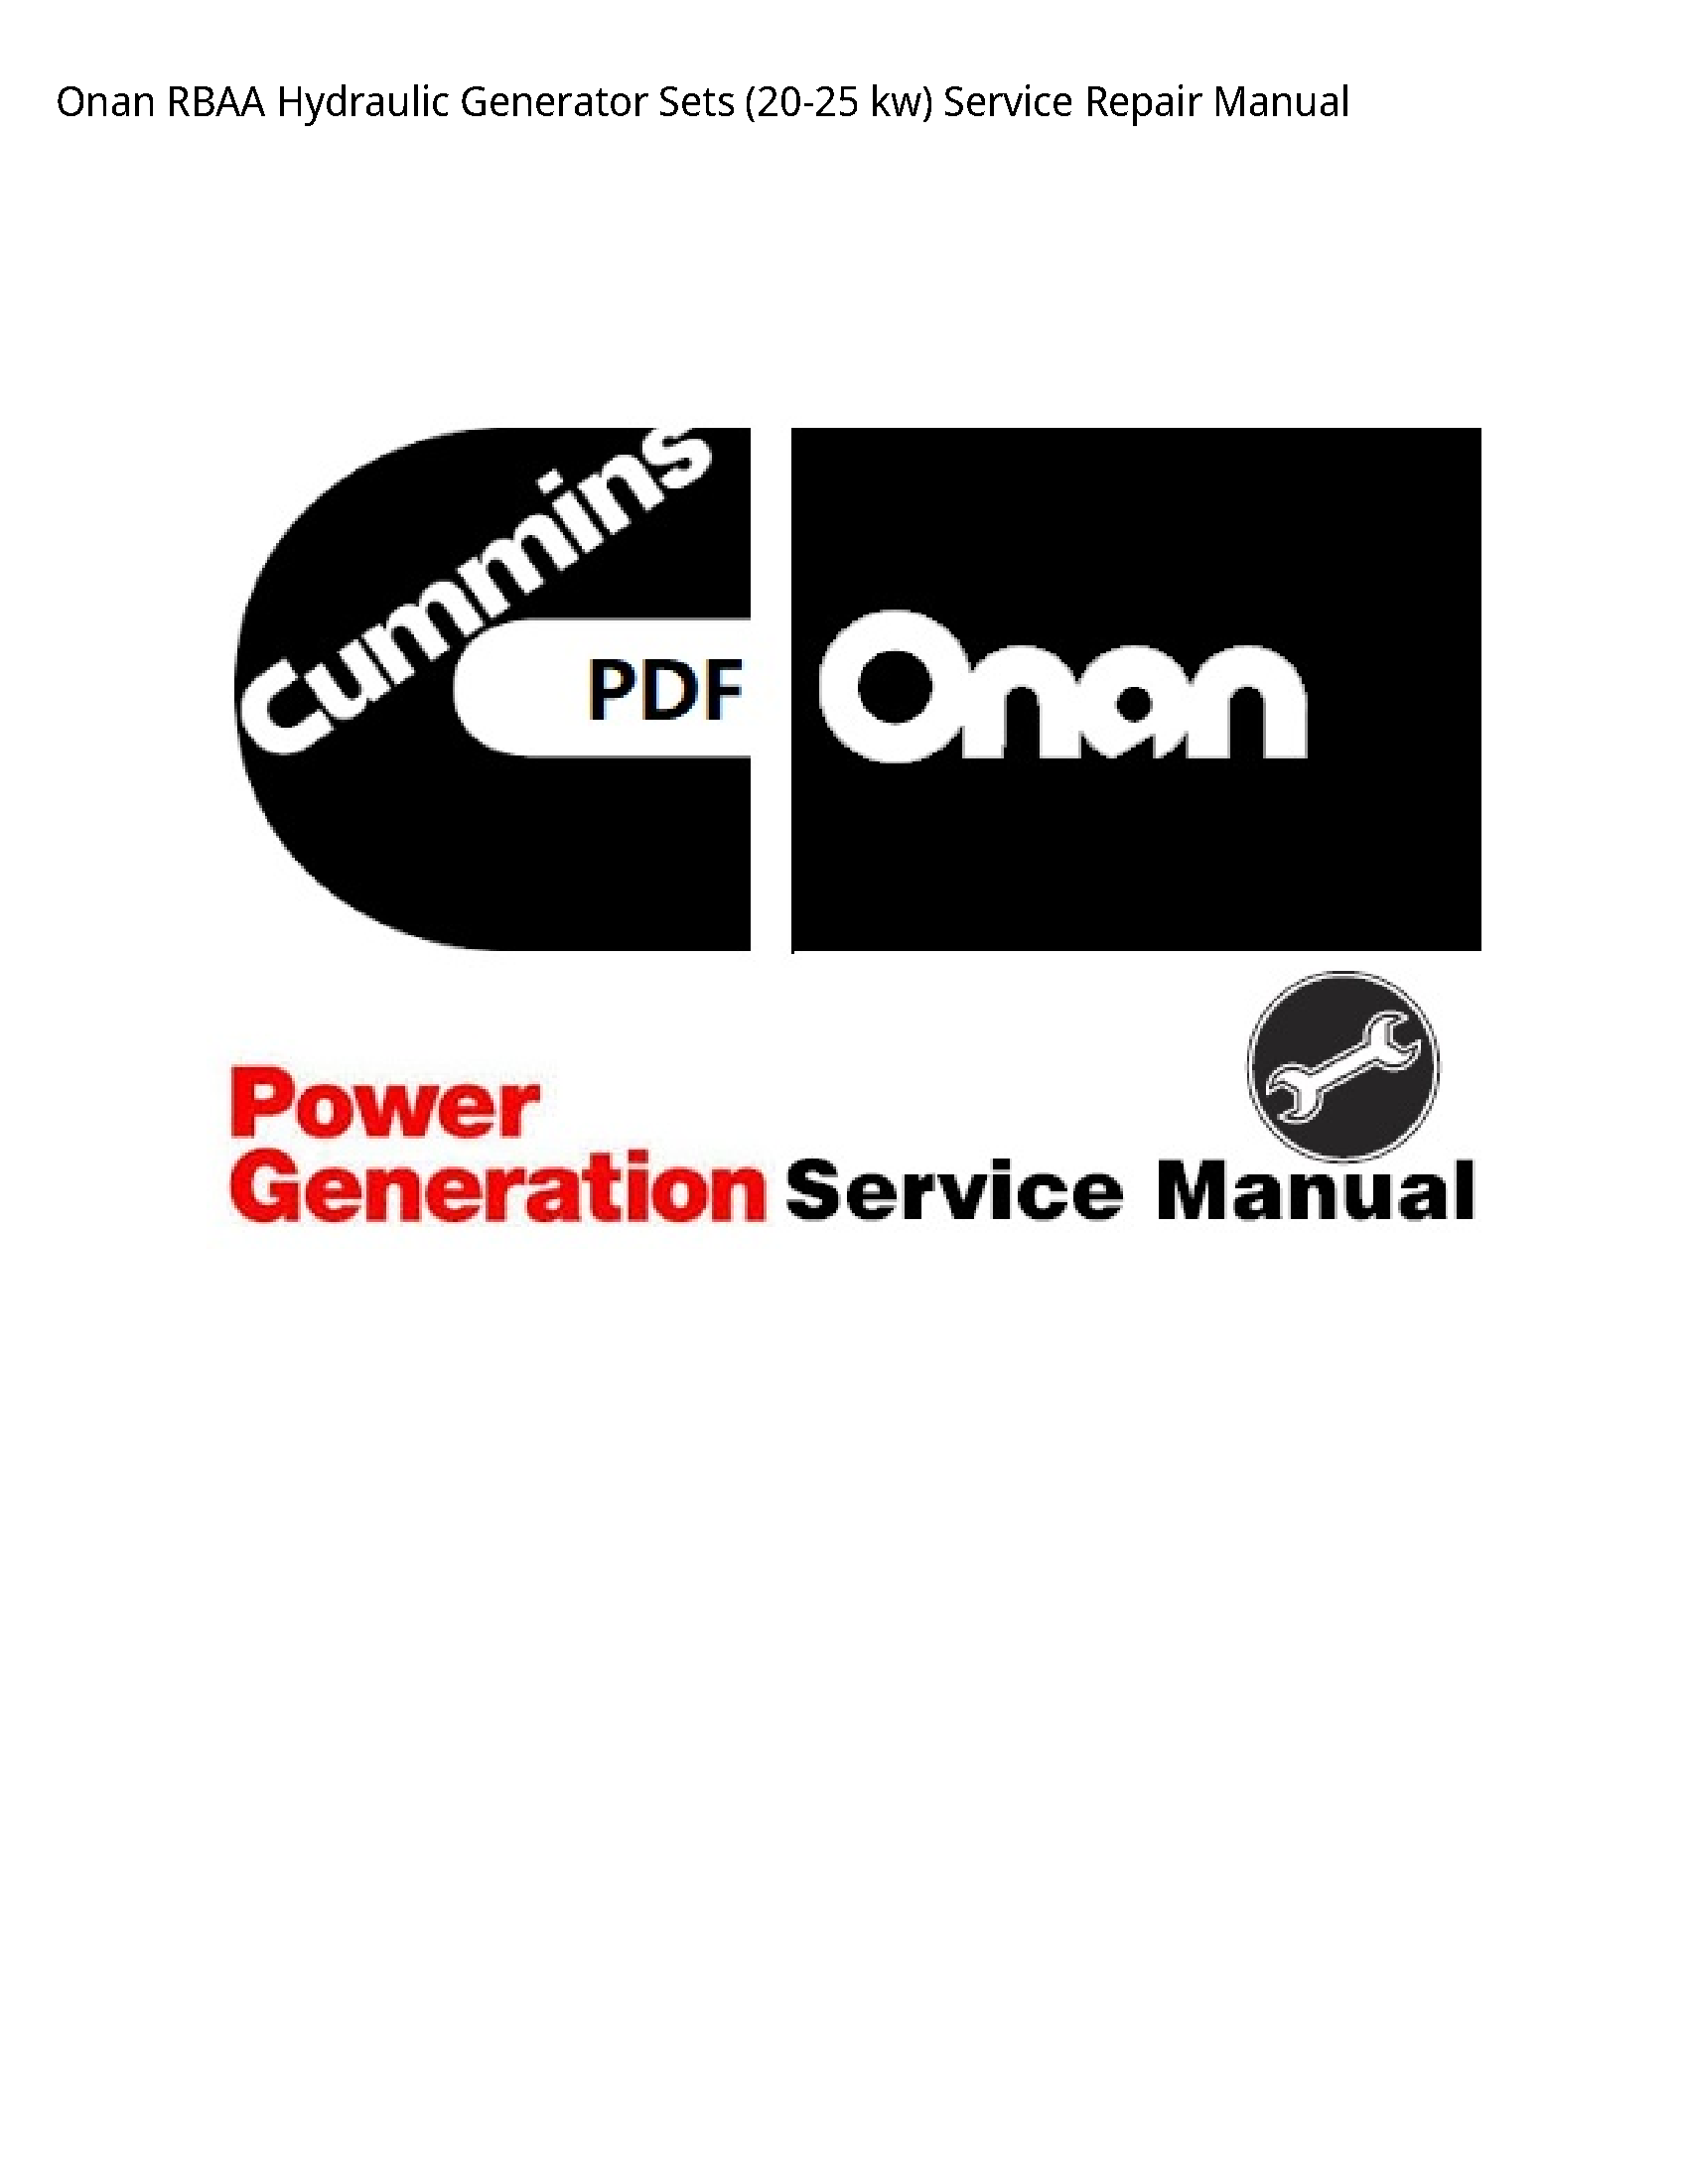 Onan (20-25 RBAA Hydraulic Generator Sets kw) manual